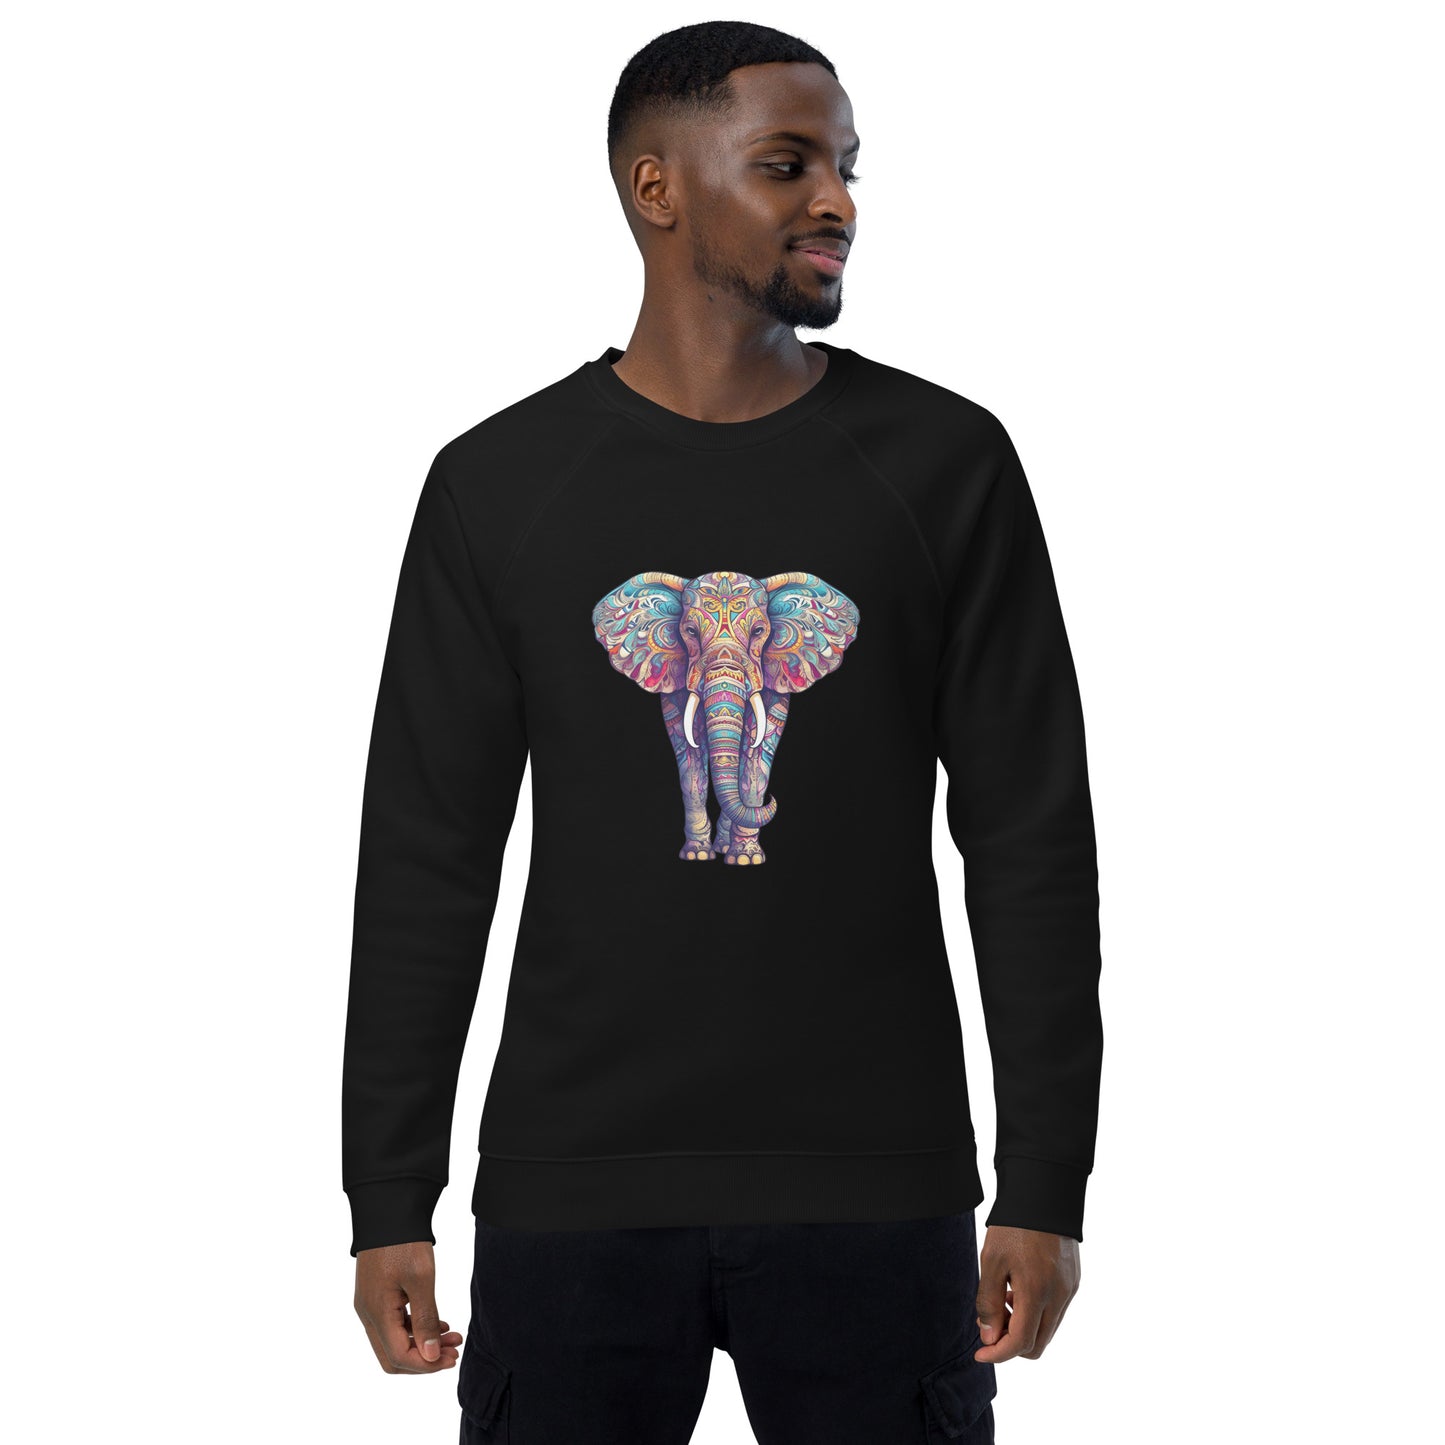 Unisex Bio-Sweatshirt/Bunt-Elefant